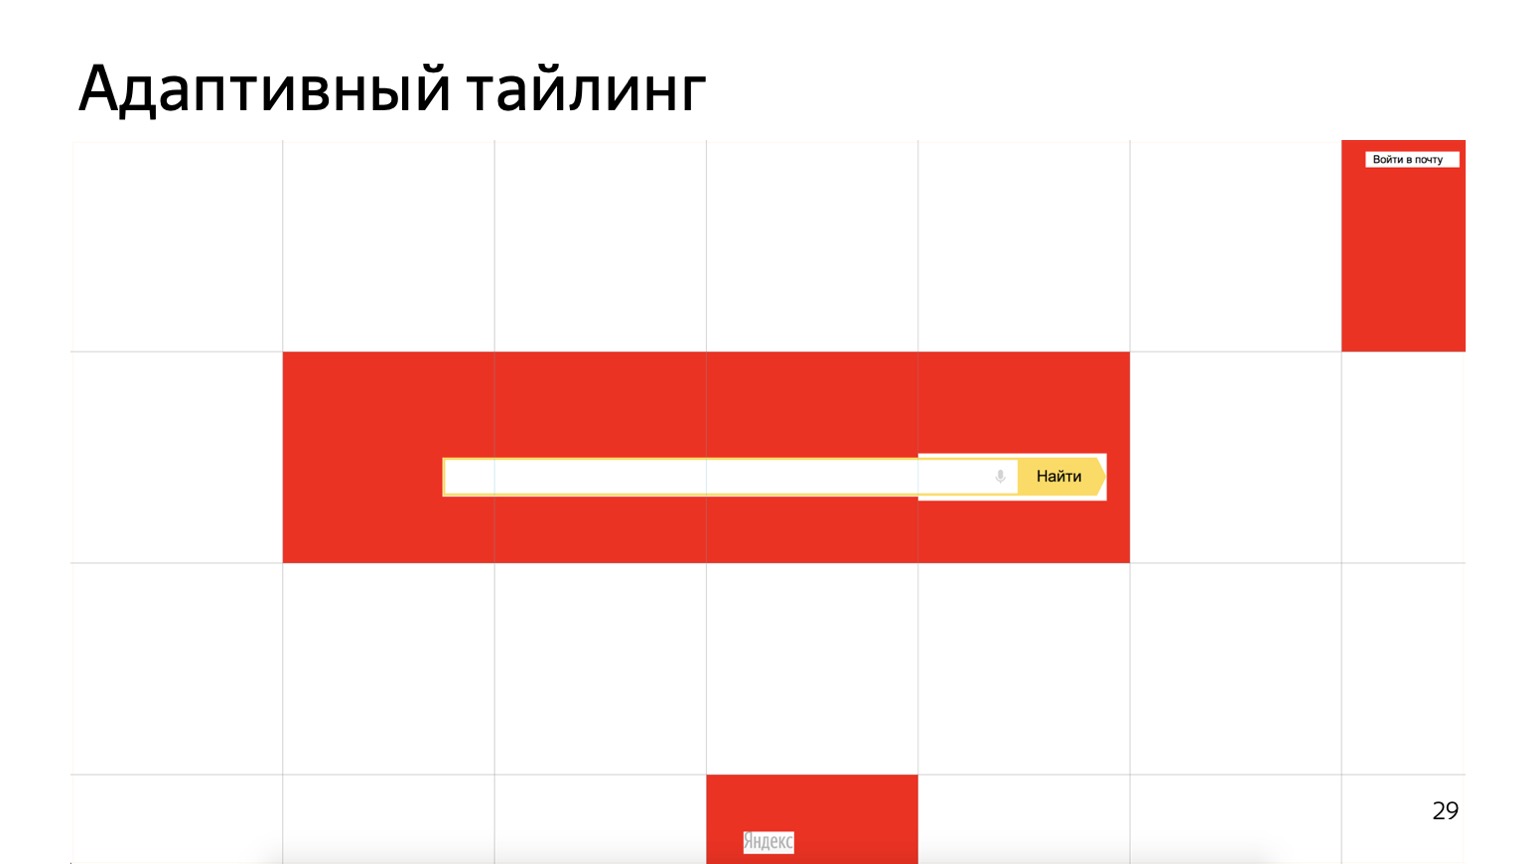 Как рисует браузер. Доклад Яндекса - 28